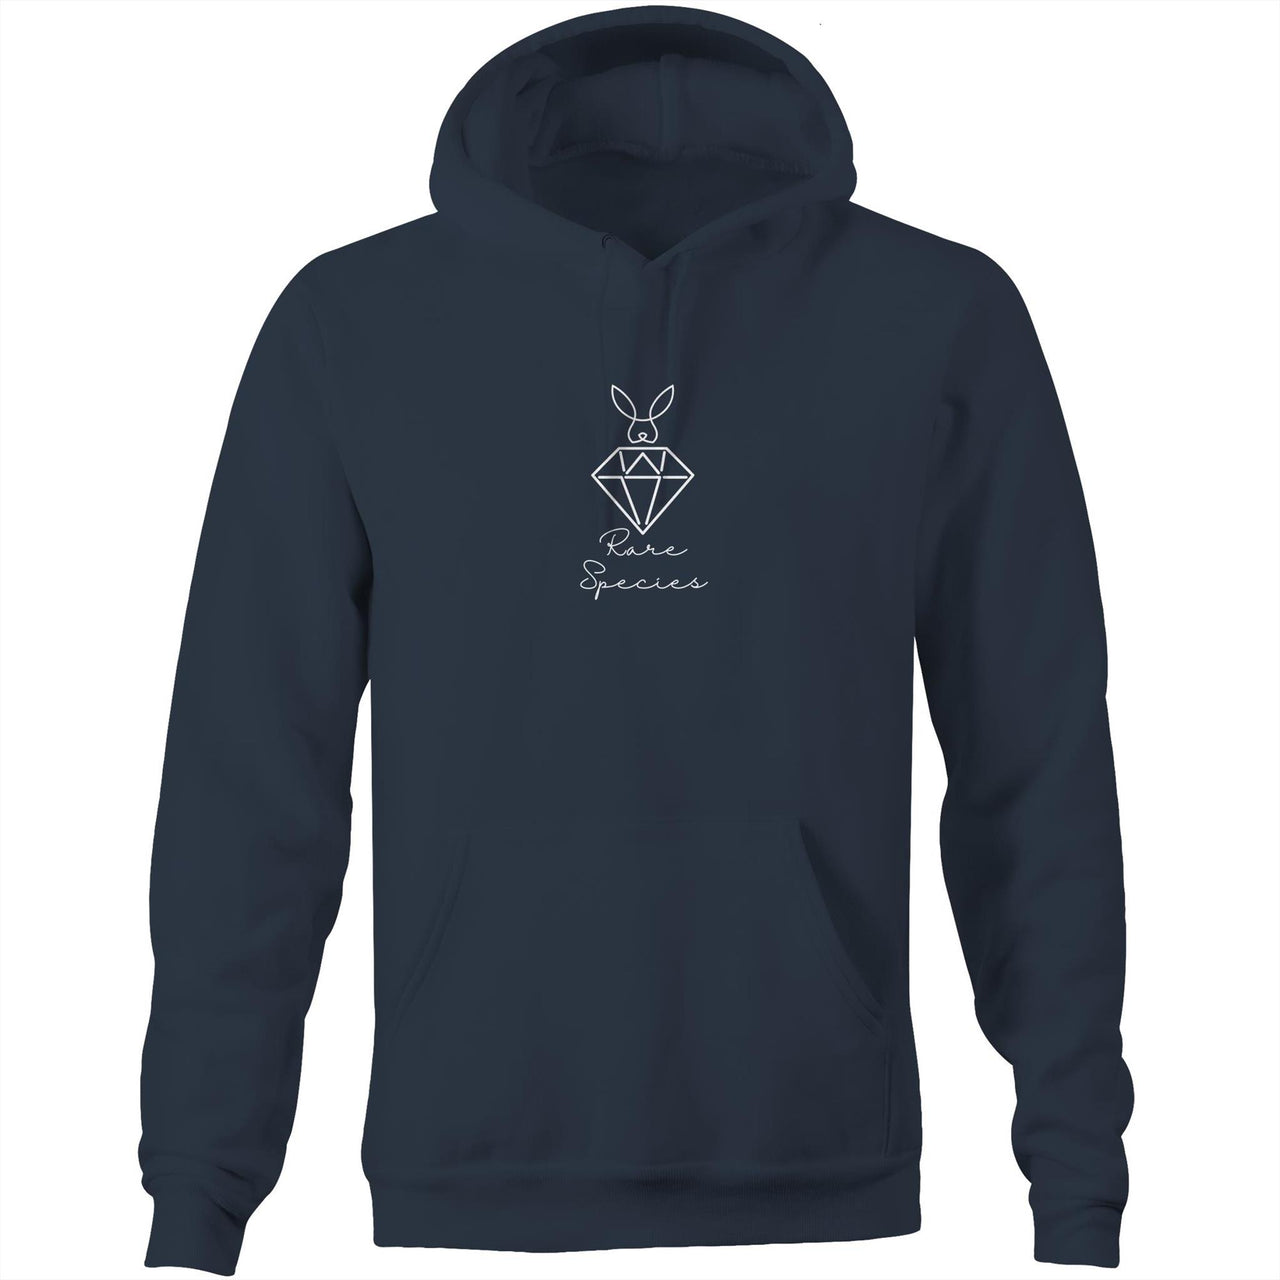 CBF Rare Species Pocket Hoodie Sweatshirt Navy by CBF Clothing